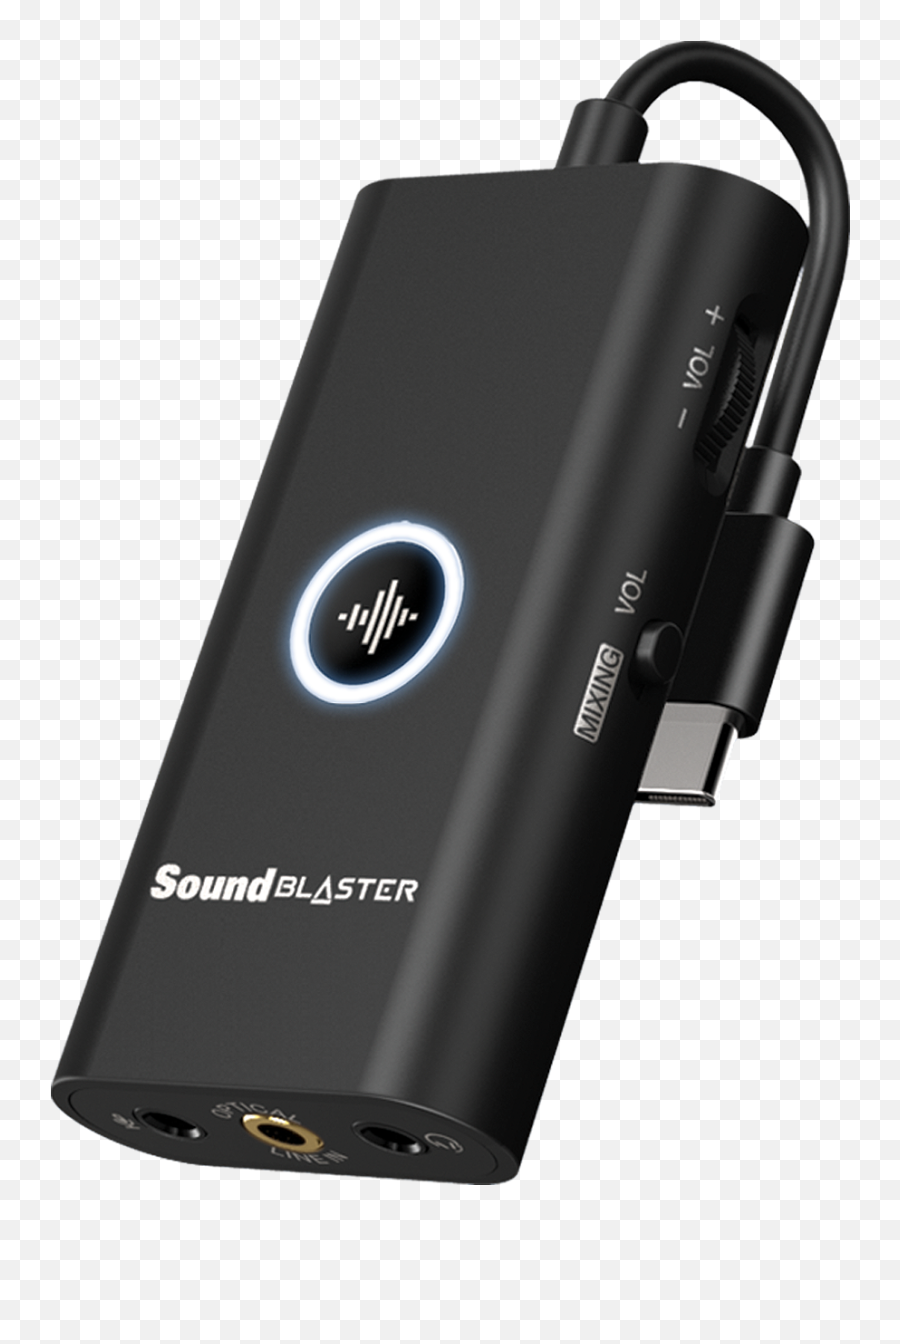 Sound Blaster Gc7 Game Streaming Usb Dac And Amp With Emoji,Wireless Portable Speakers Emojis